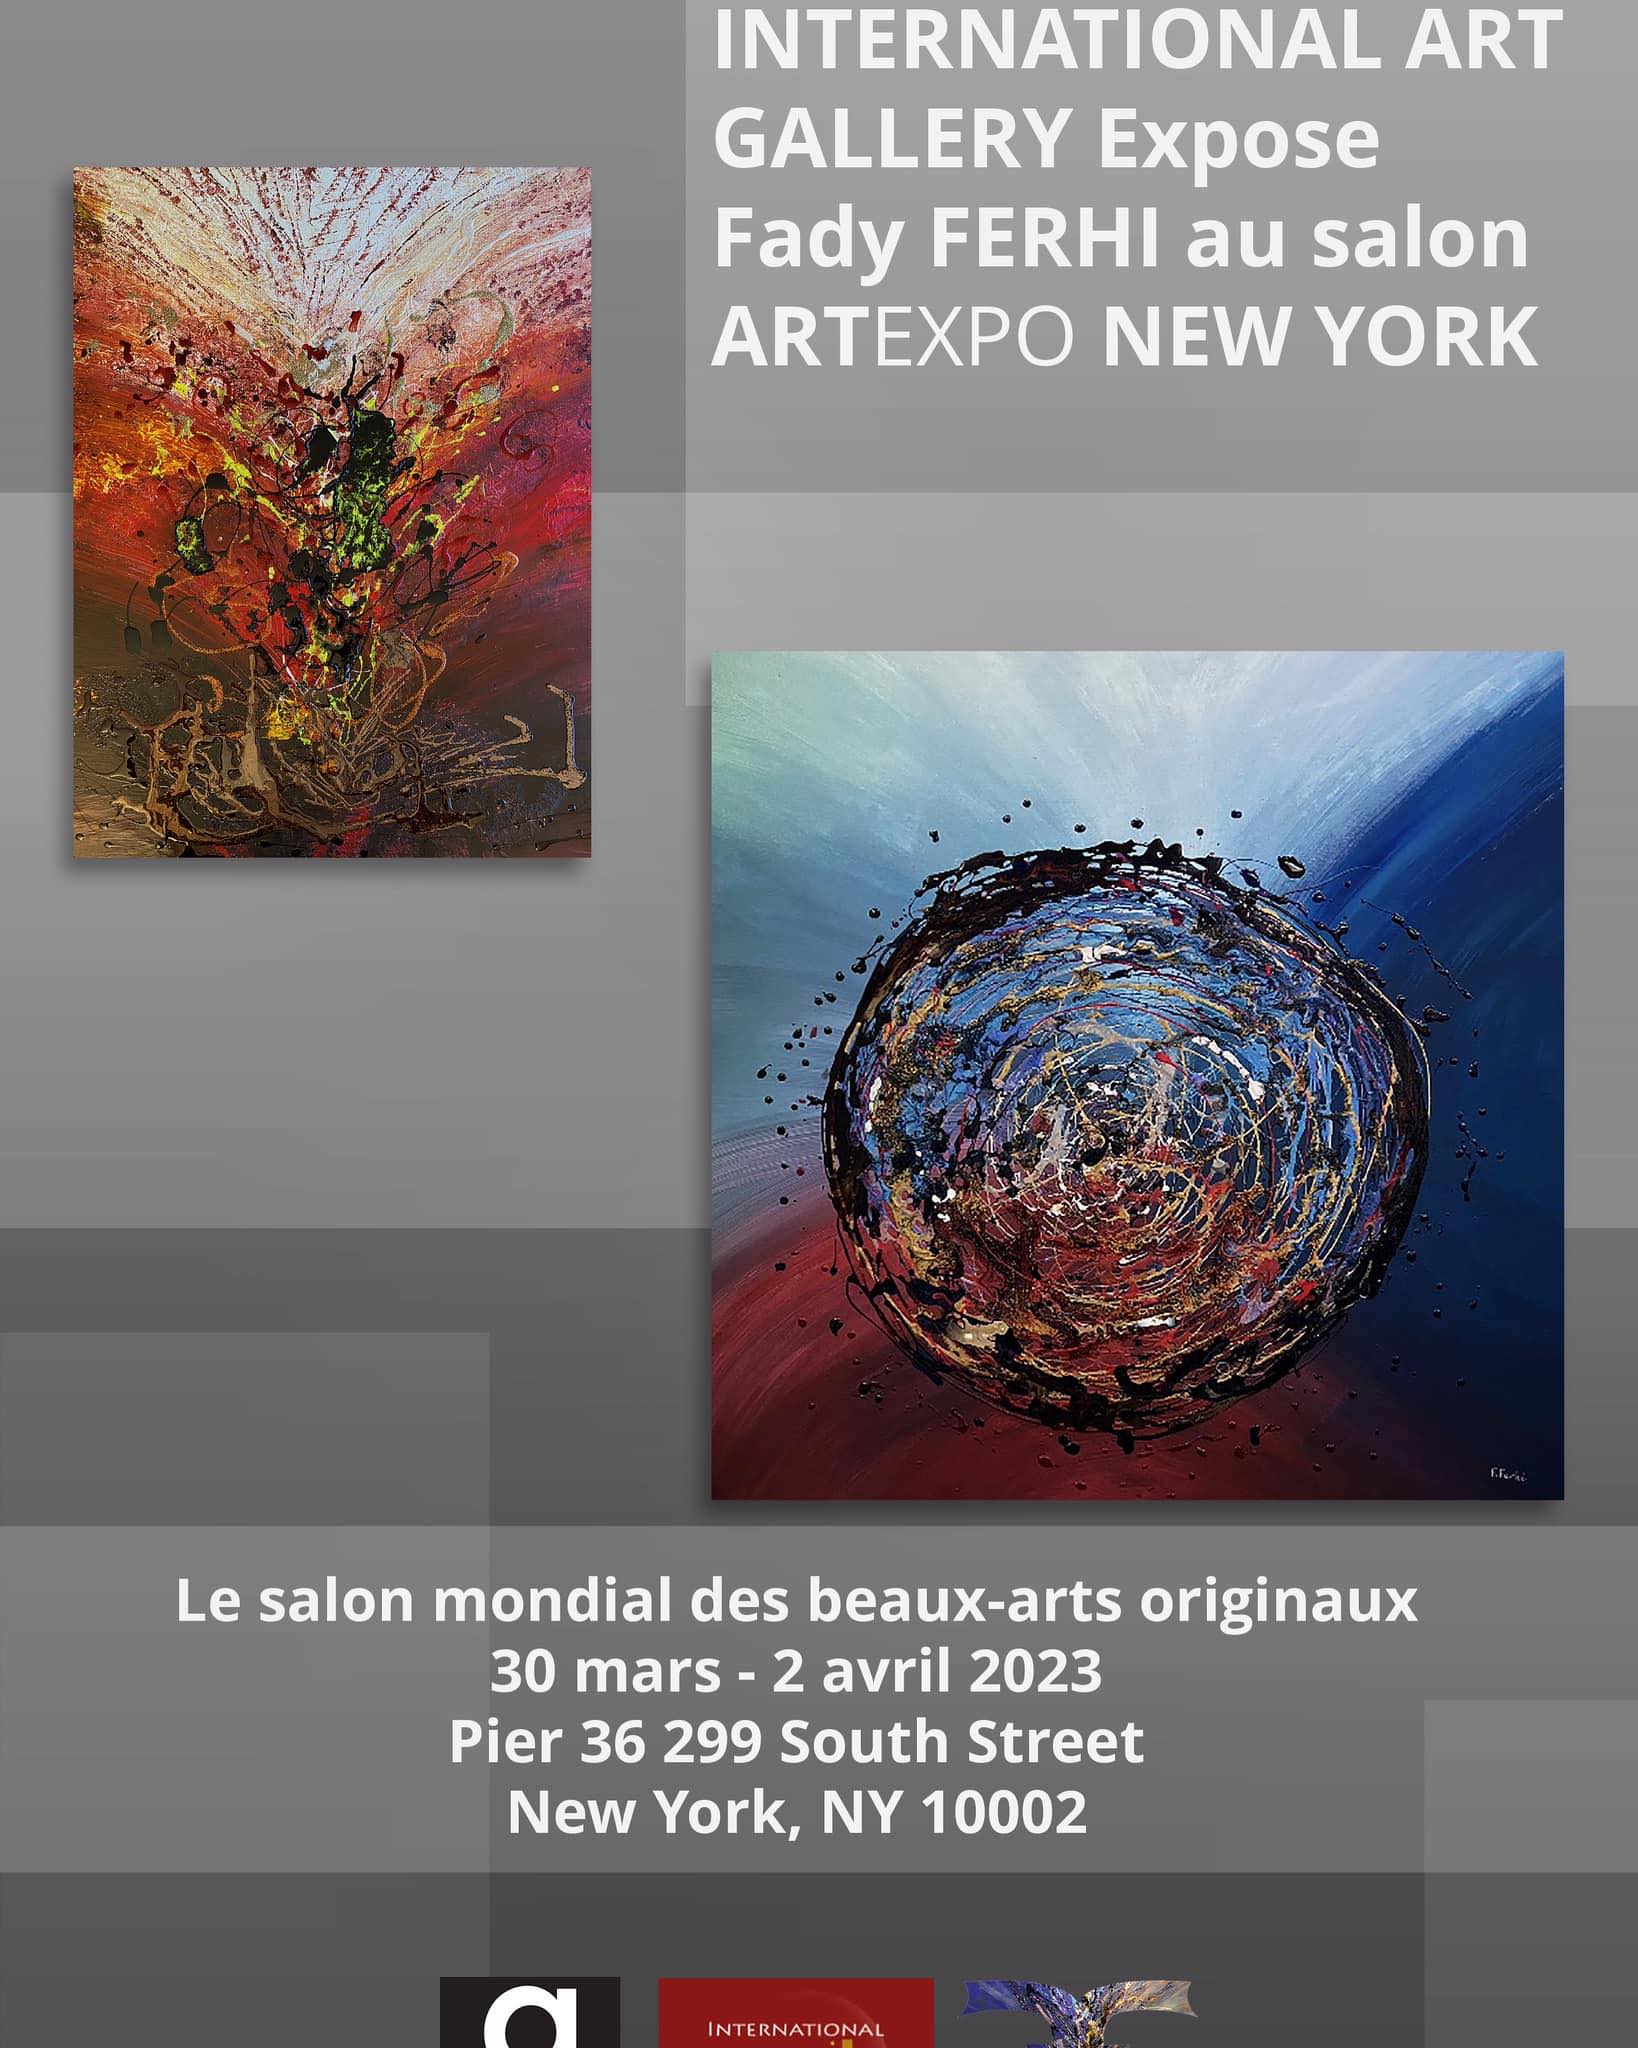 INTERNATIONAL ART GALLERY exhibits Fady FERHI at ArtExpo New York 2023 _- ARTEXPO 2023 NEW YORK| FAIR RECAP - FADY FERHI